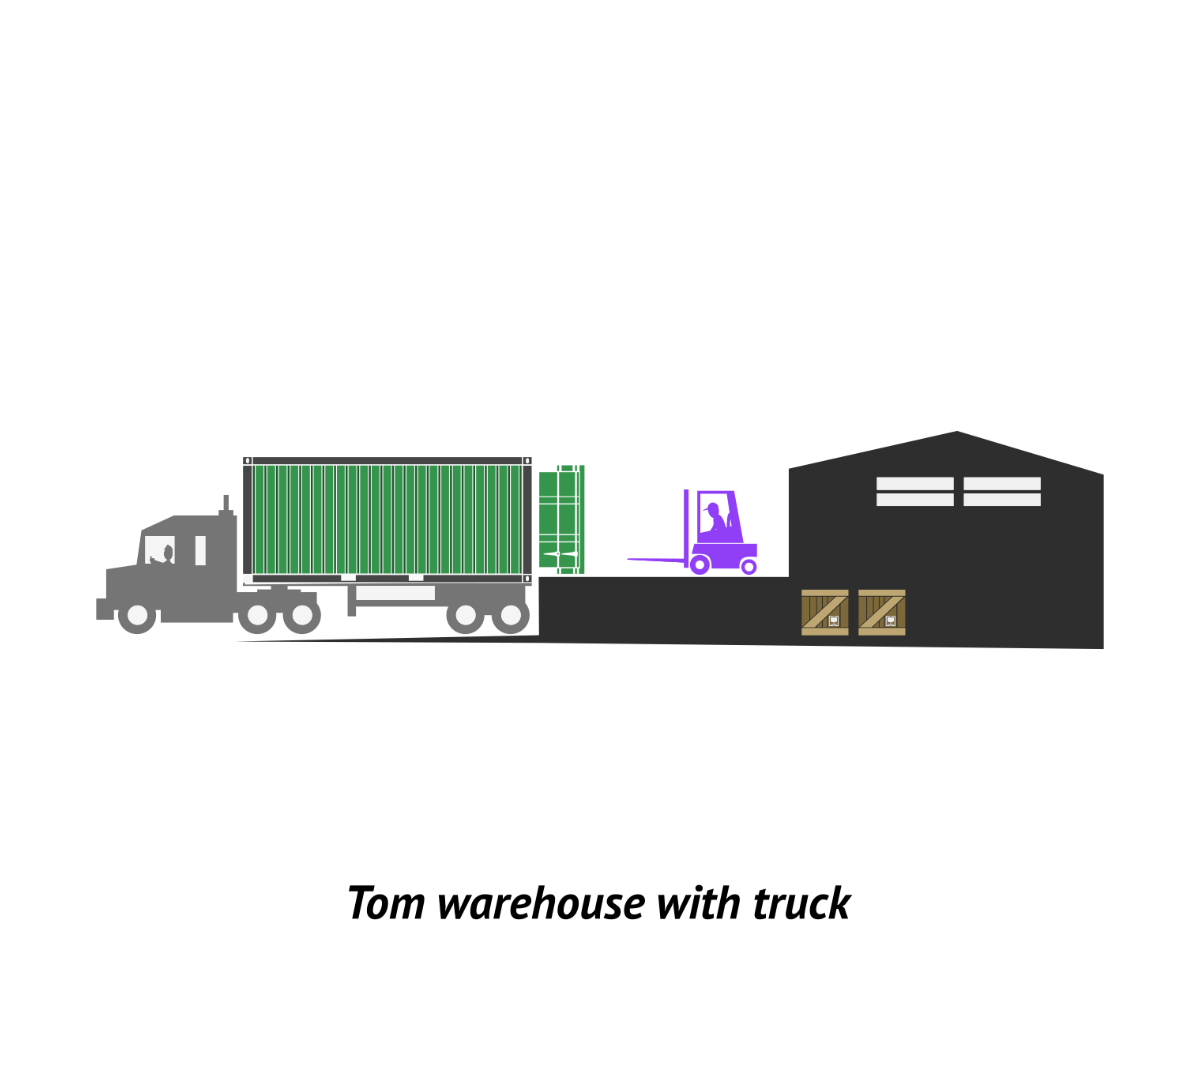 Truck unloading goods into warehouse